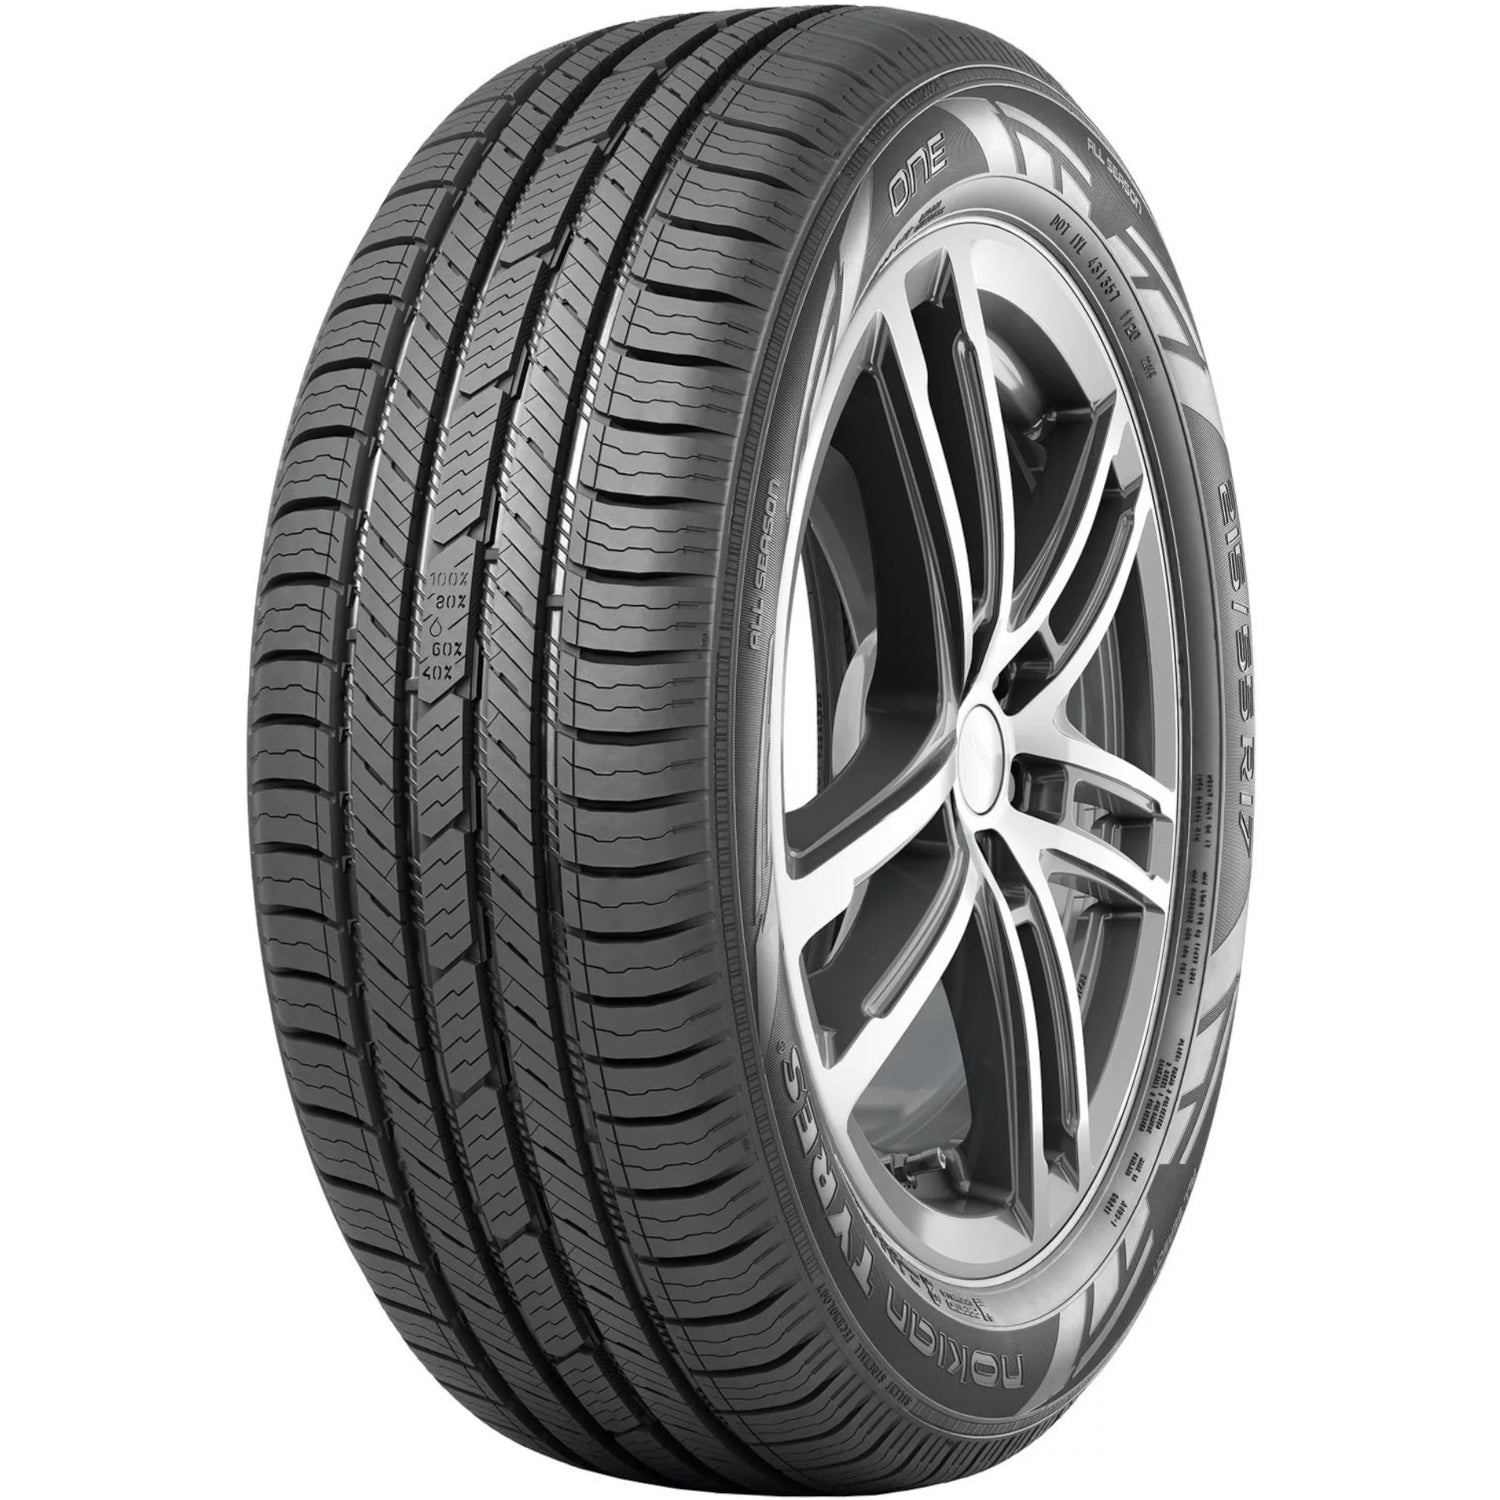 NOKIAN ONE 225/60R17 (27.6X8.9R 17) Tires